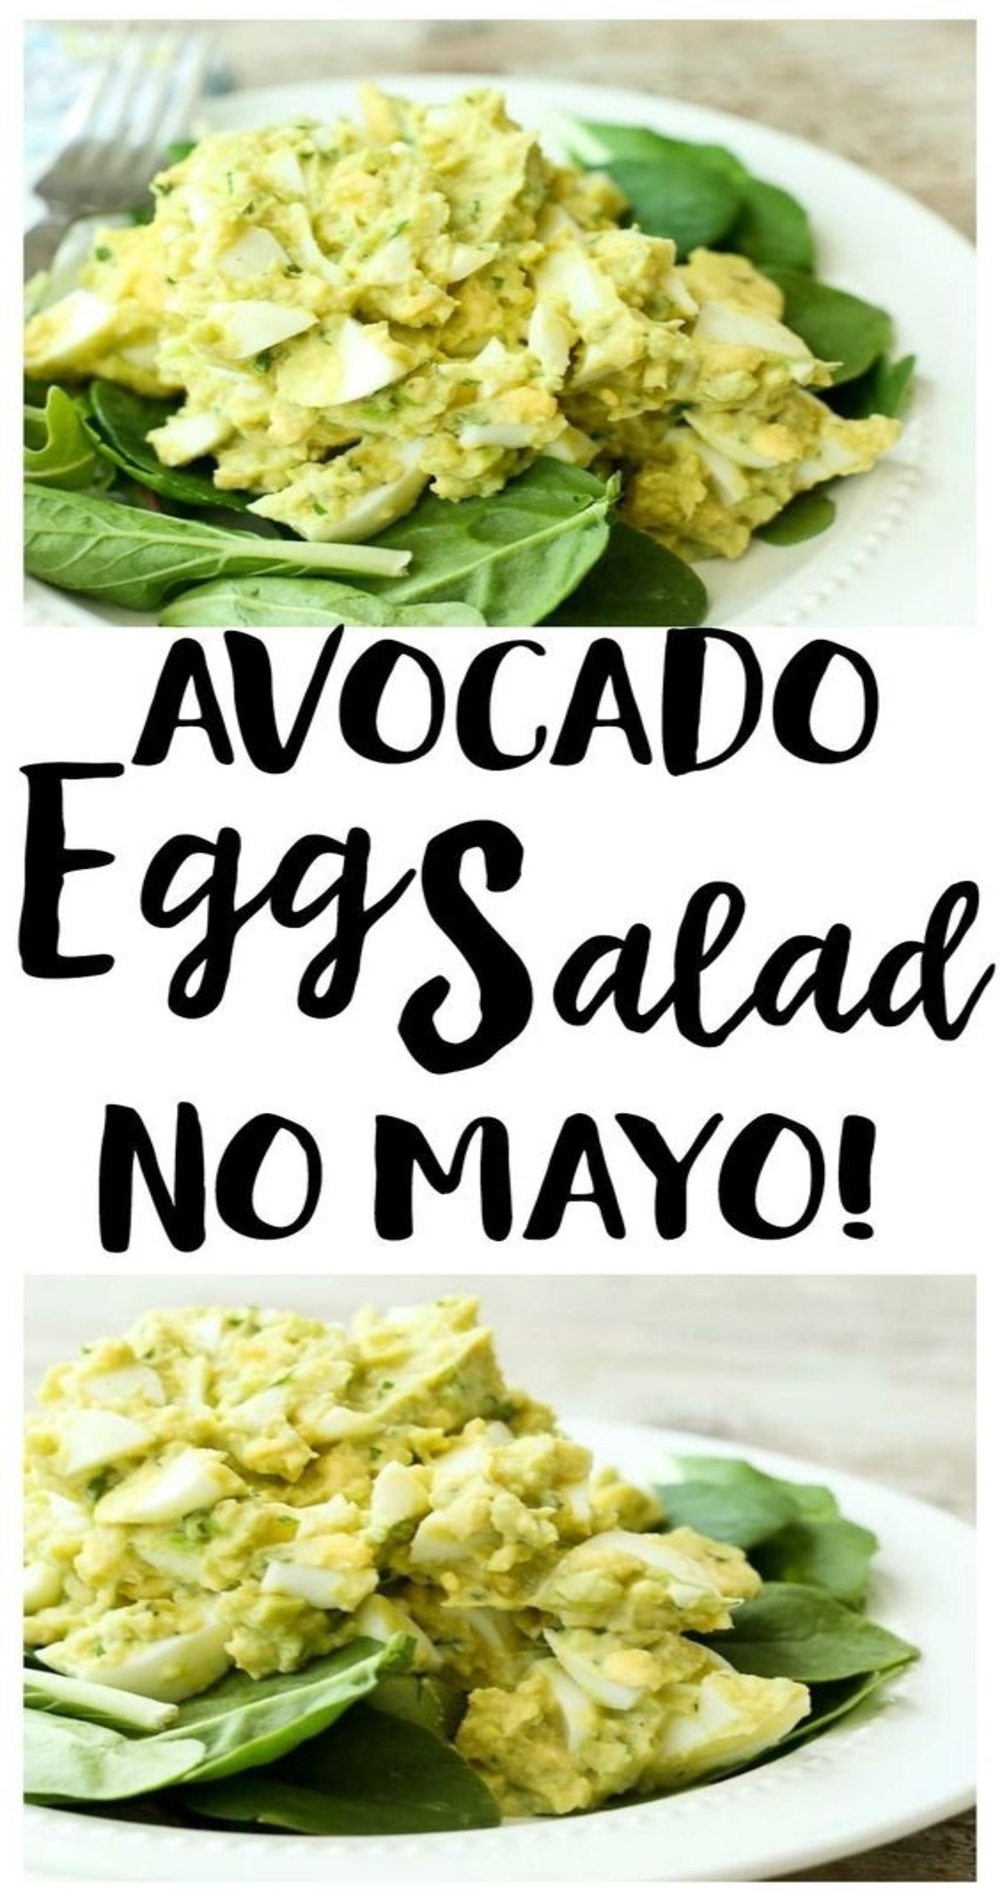 avocado egg salad (no mayo)